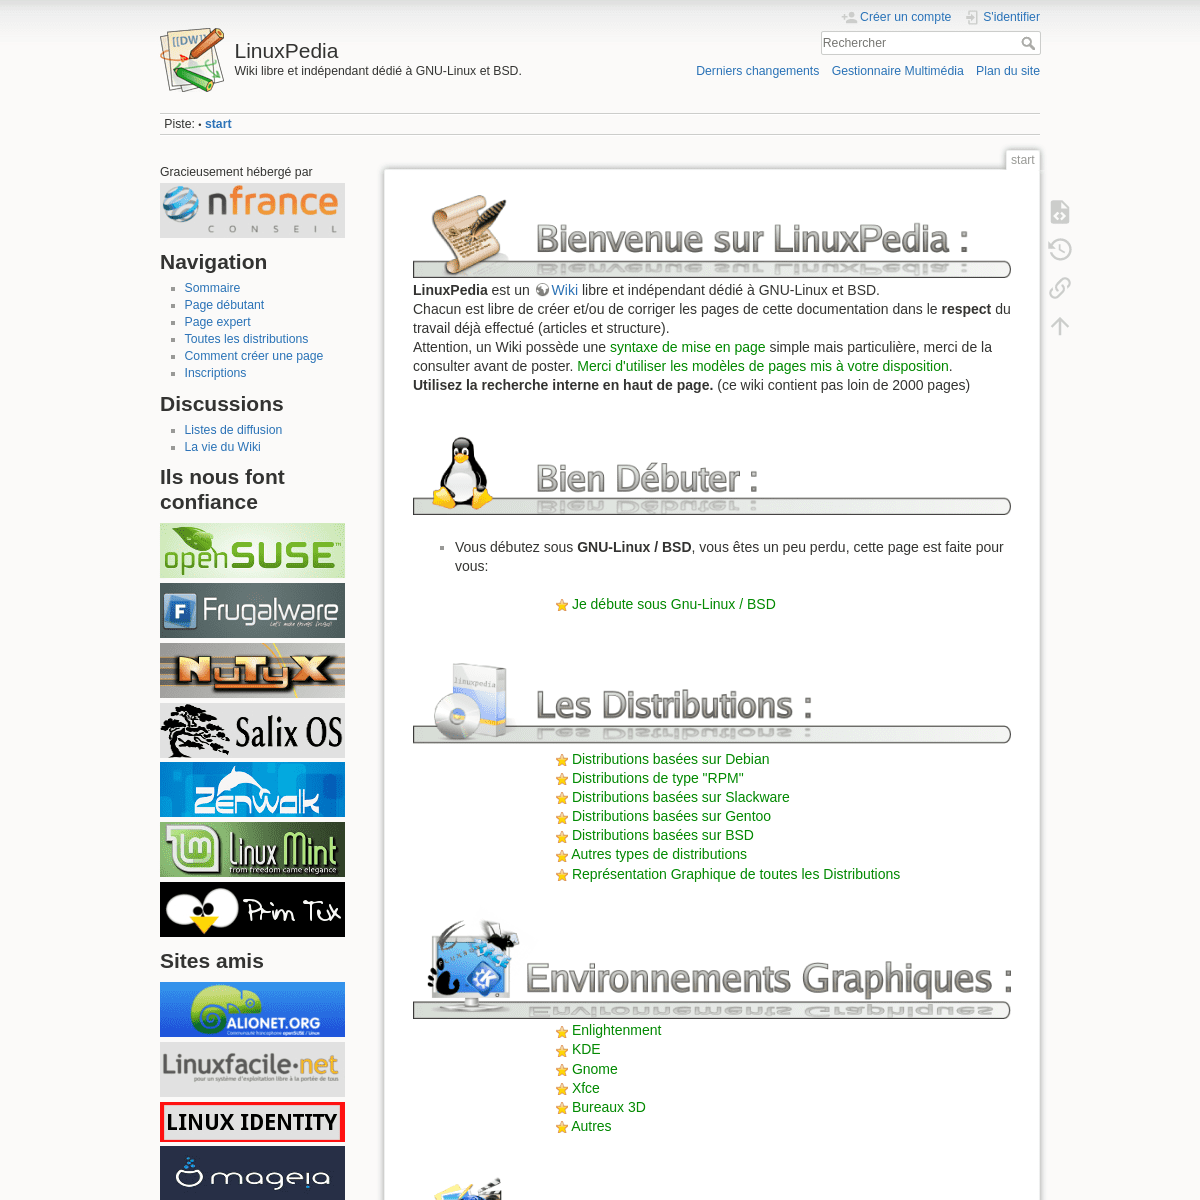 A complete backup of https://linuxpedia.fr